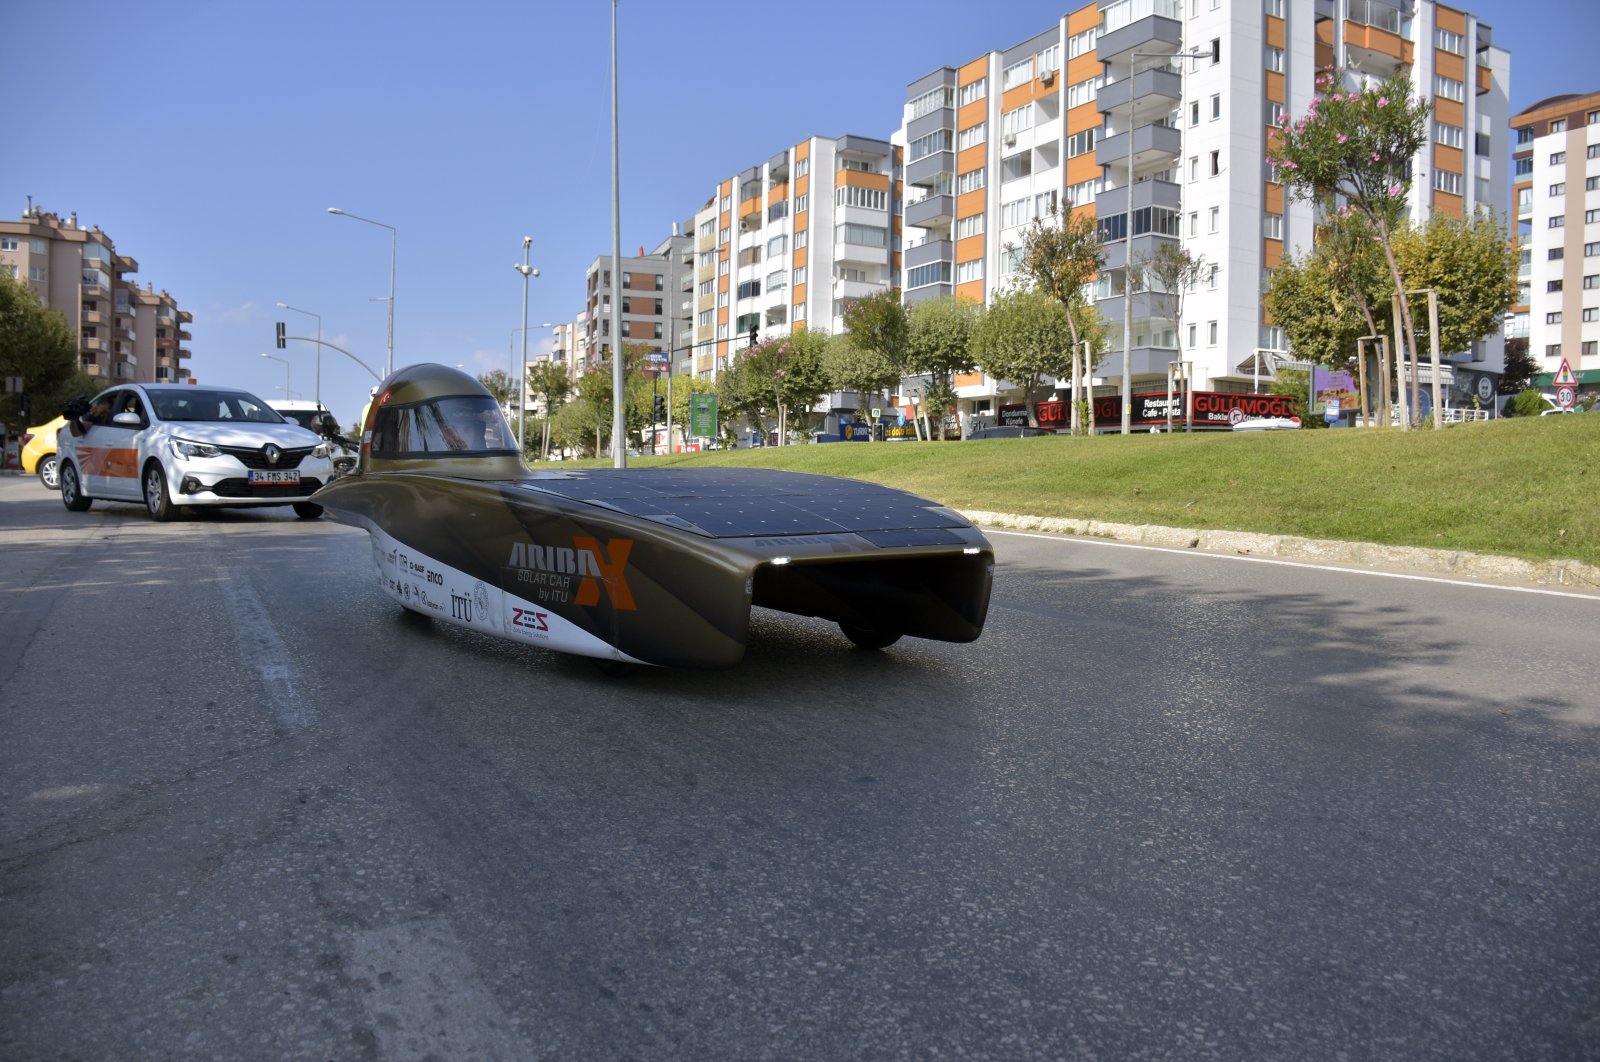 Kendaraan Turki bertenaga surya memasuki jalan untuk tur nasional